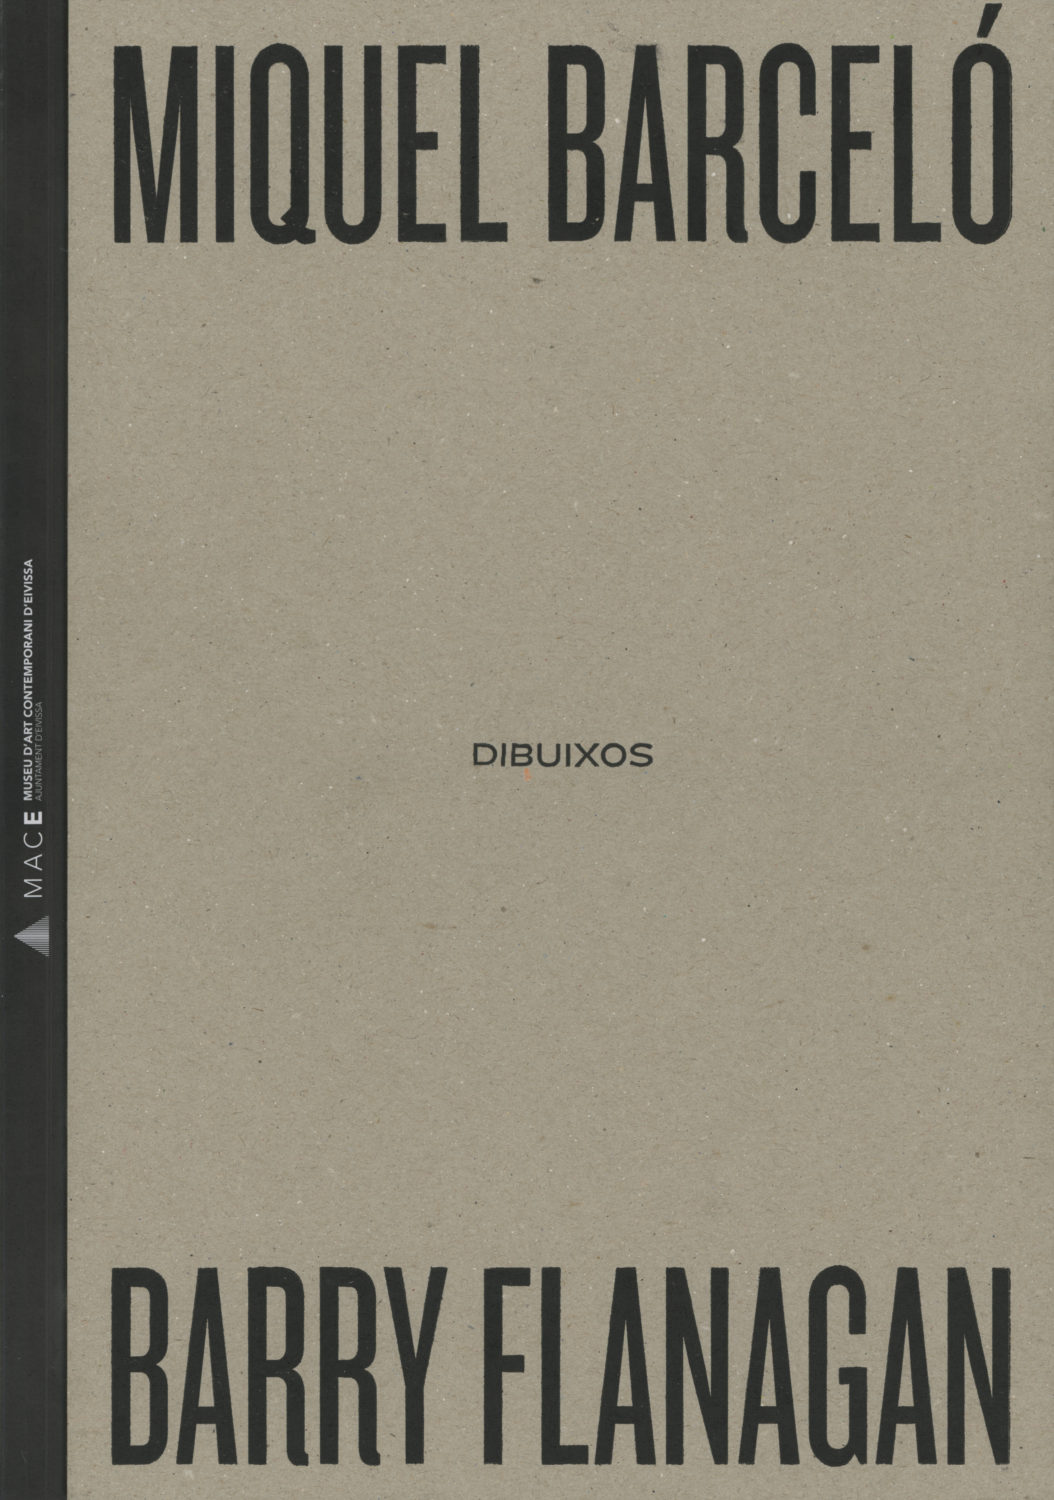 Barry Flanagan & miquel Barcelo, Catalogue cover, cropped